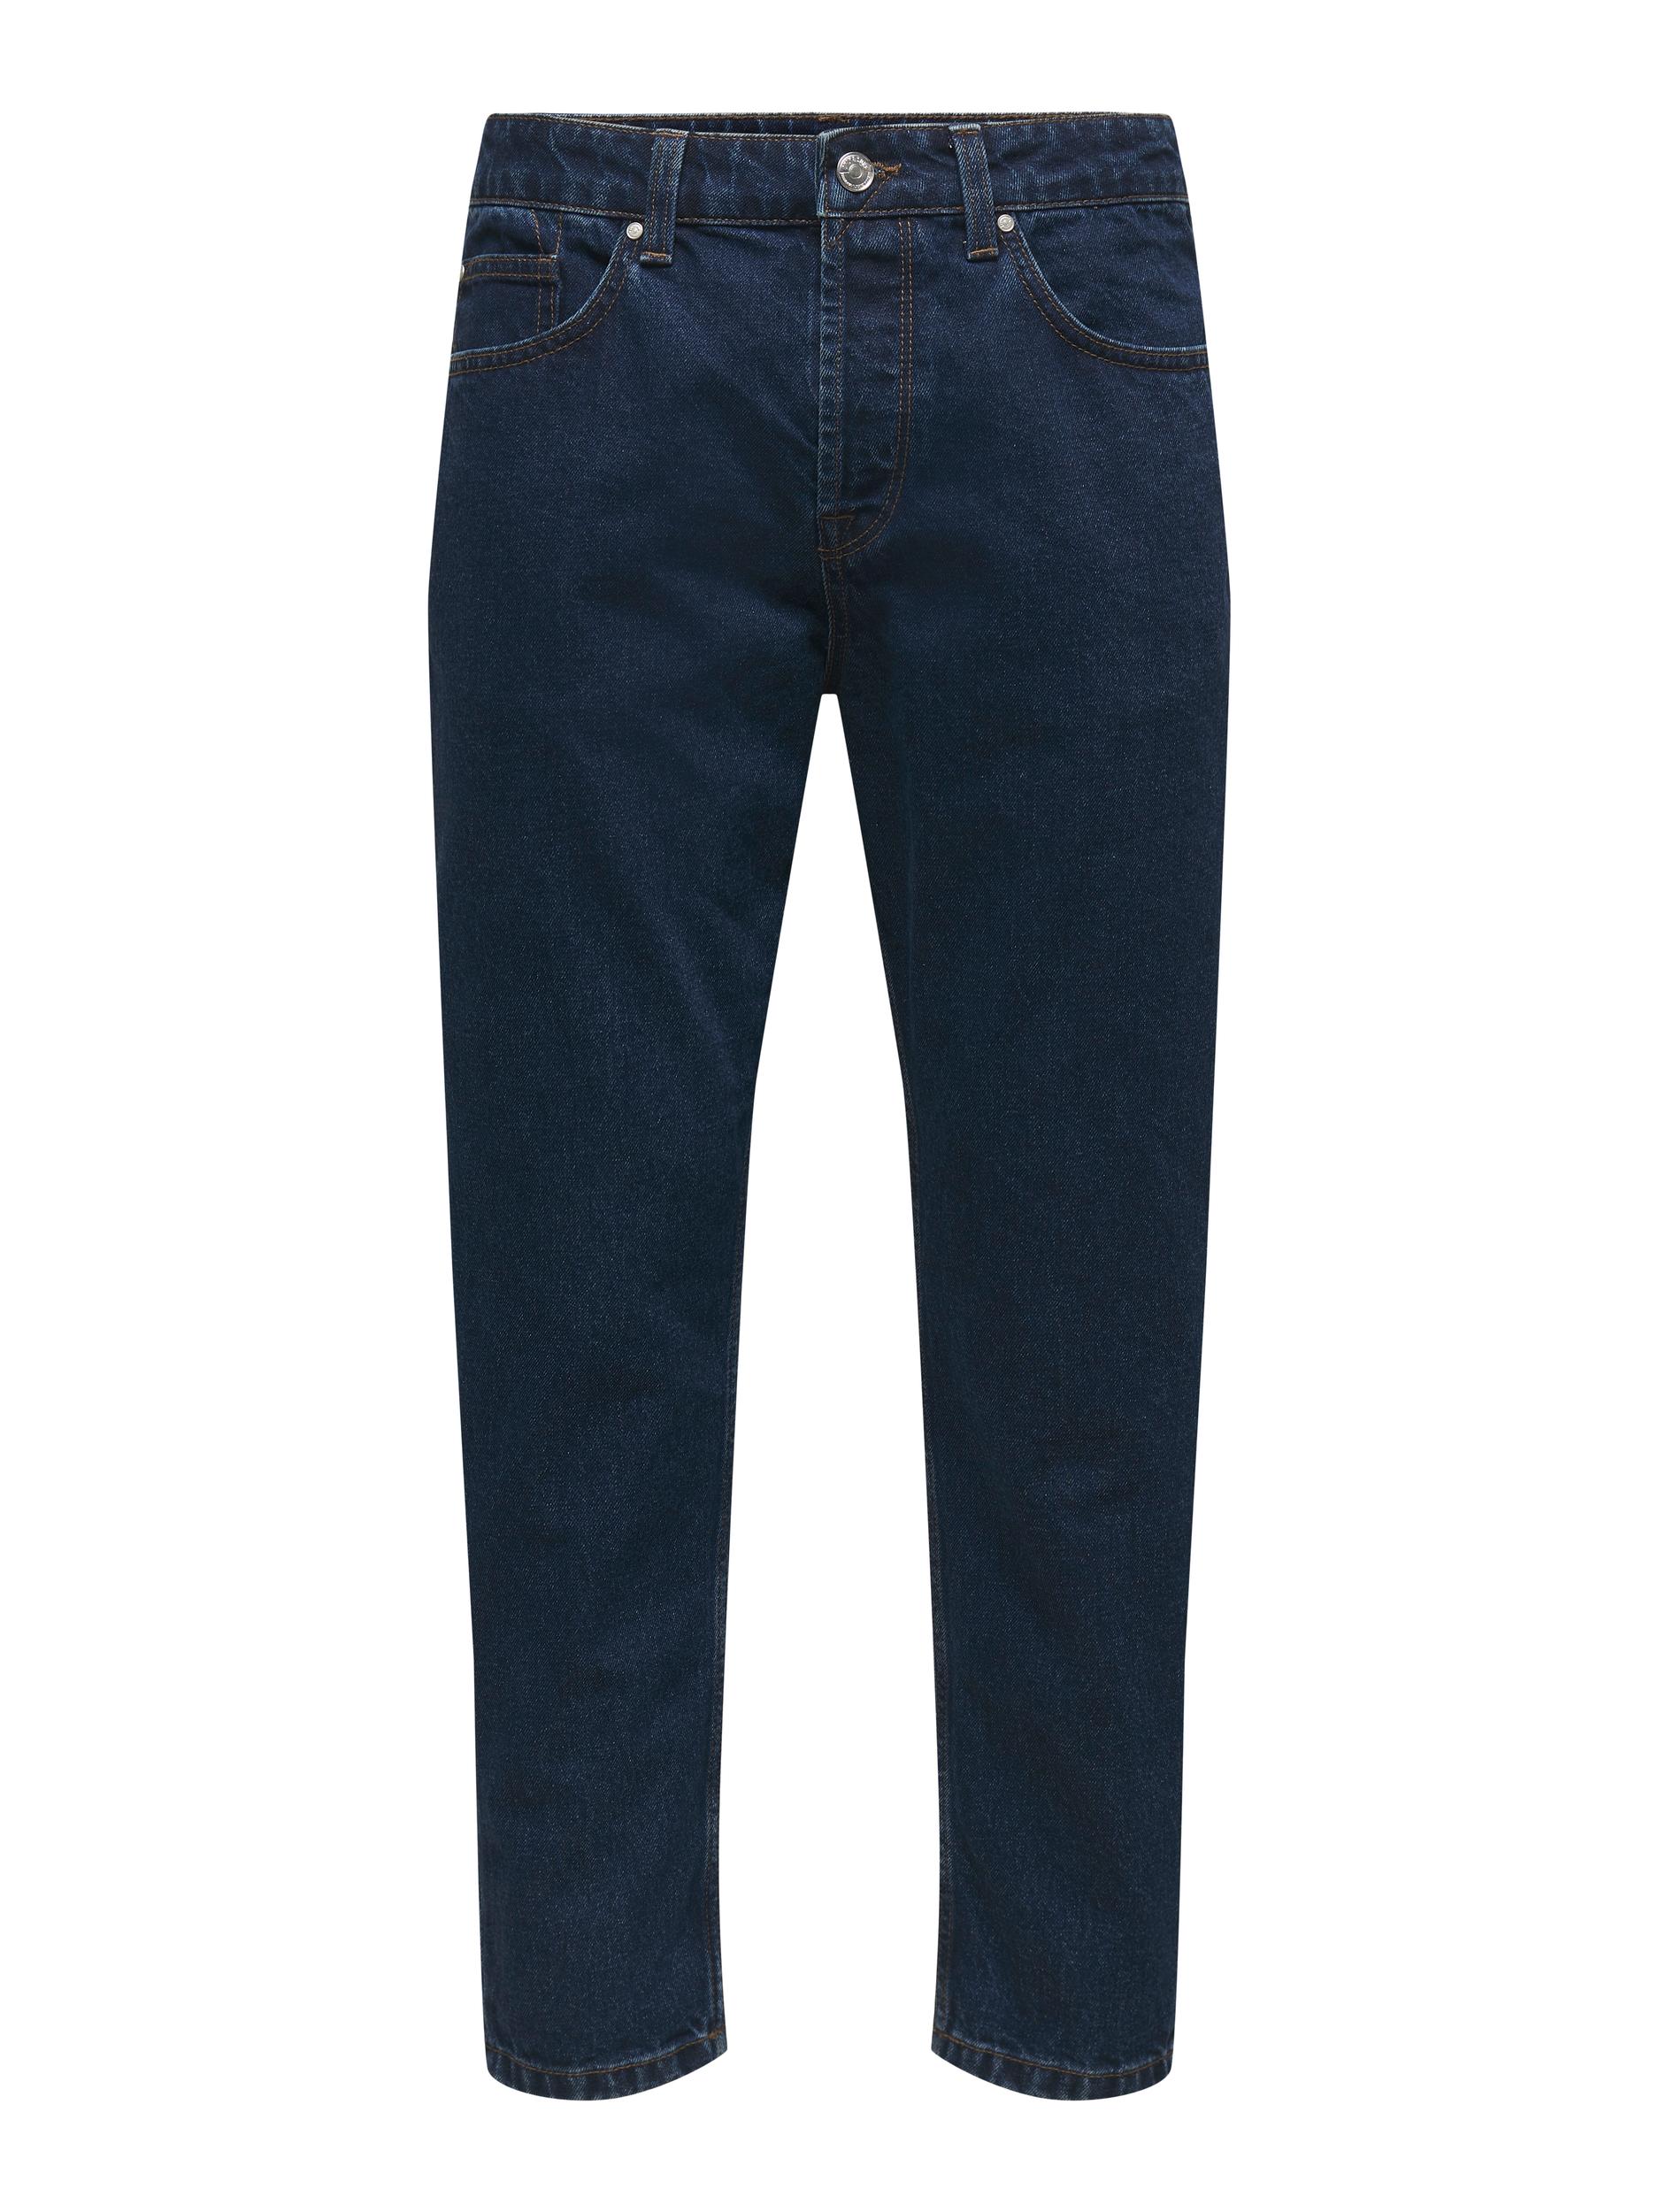 ONLY Avi Beam Life Jeans, Blue Denim, W28/L32